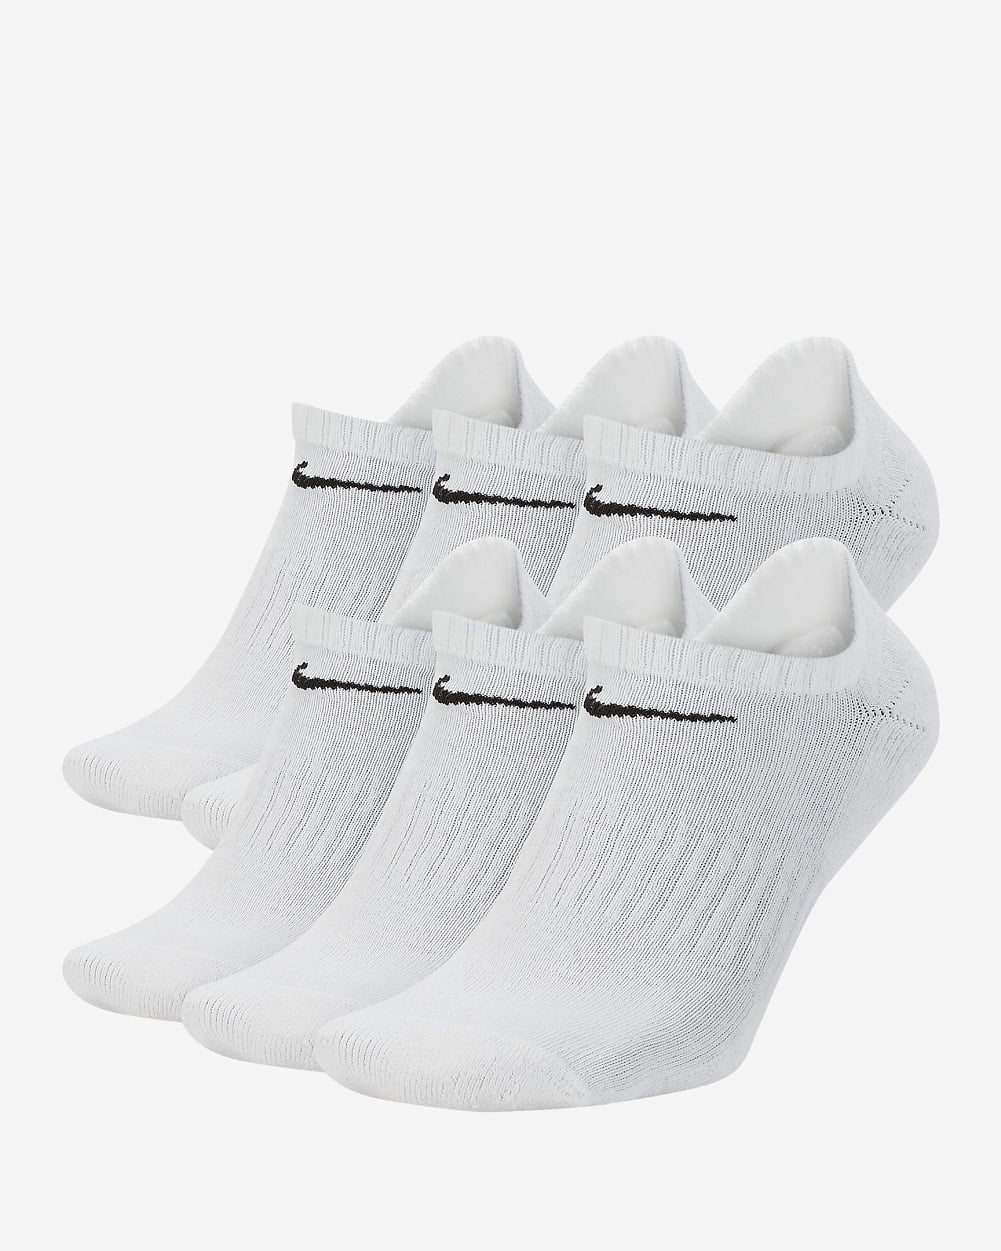 Nike Everyday Cushioned Training No-Show Socks (6 Pairs) - Walmart.com